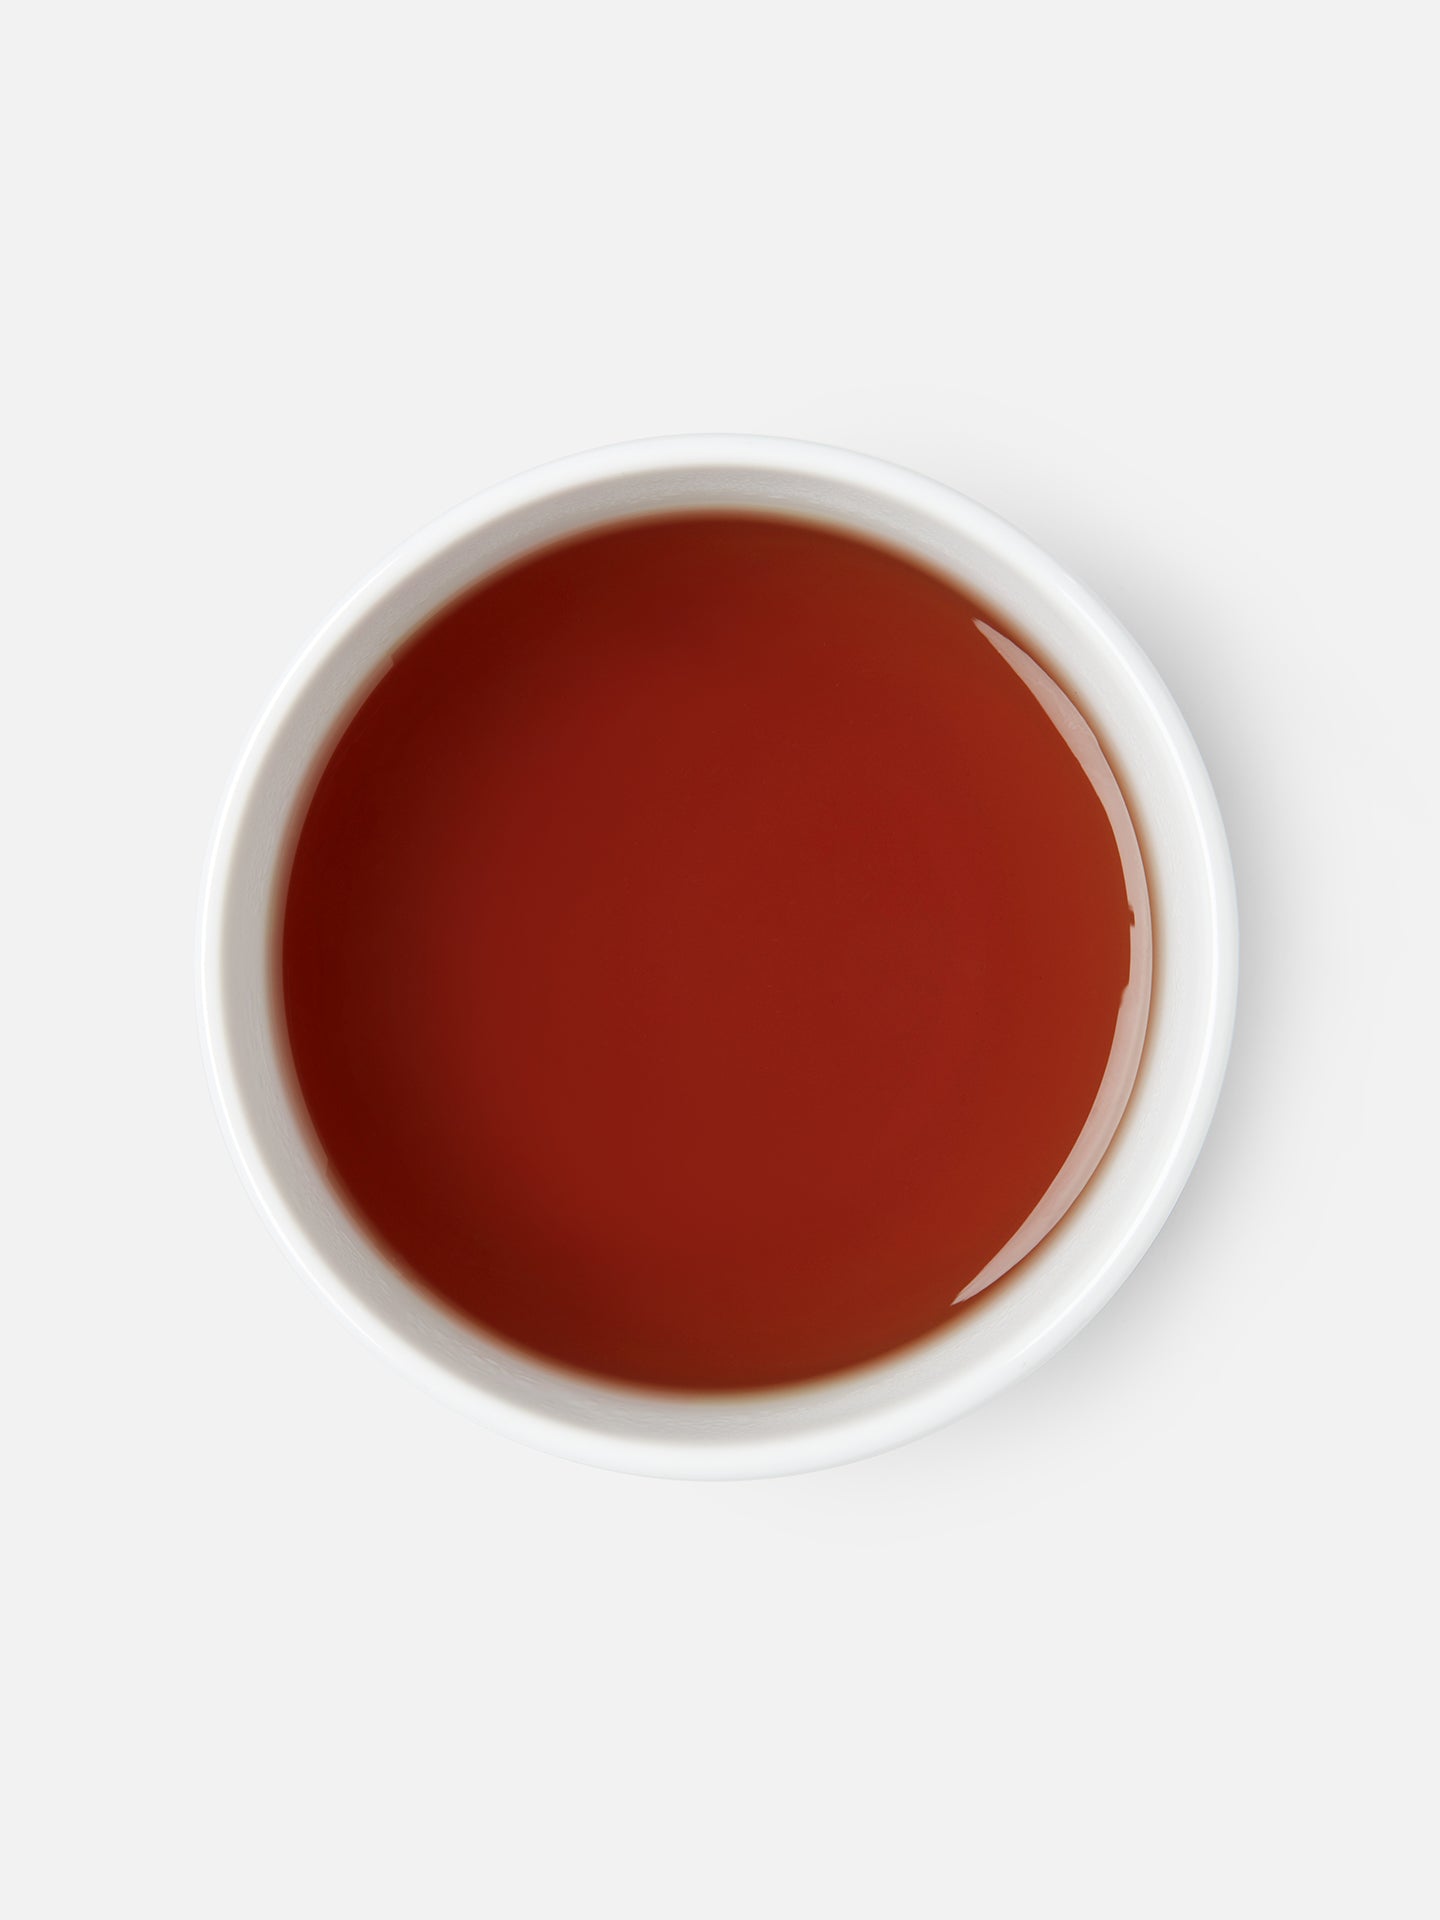 Blink Organic Lapsang Souchong Tea